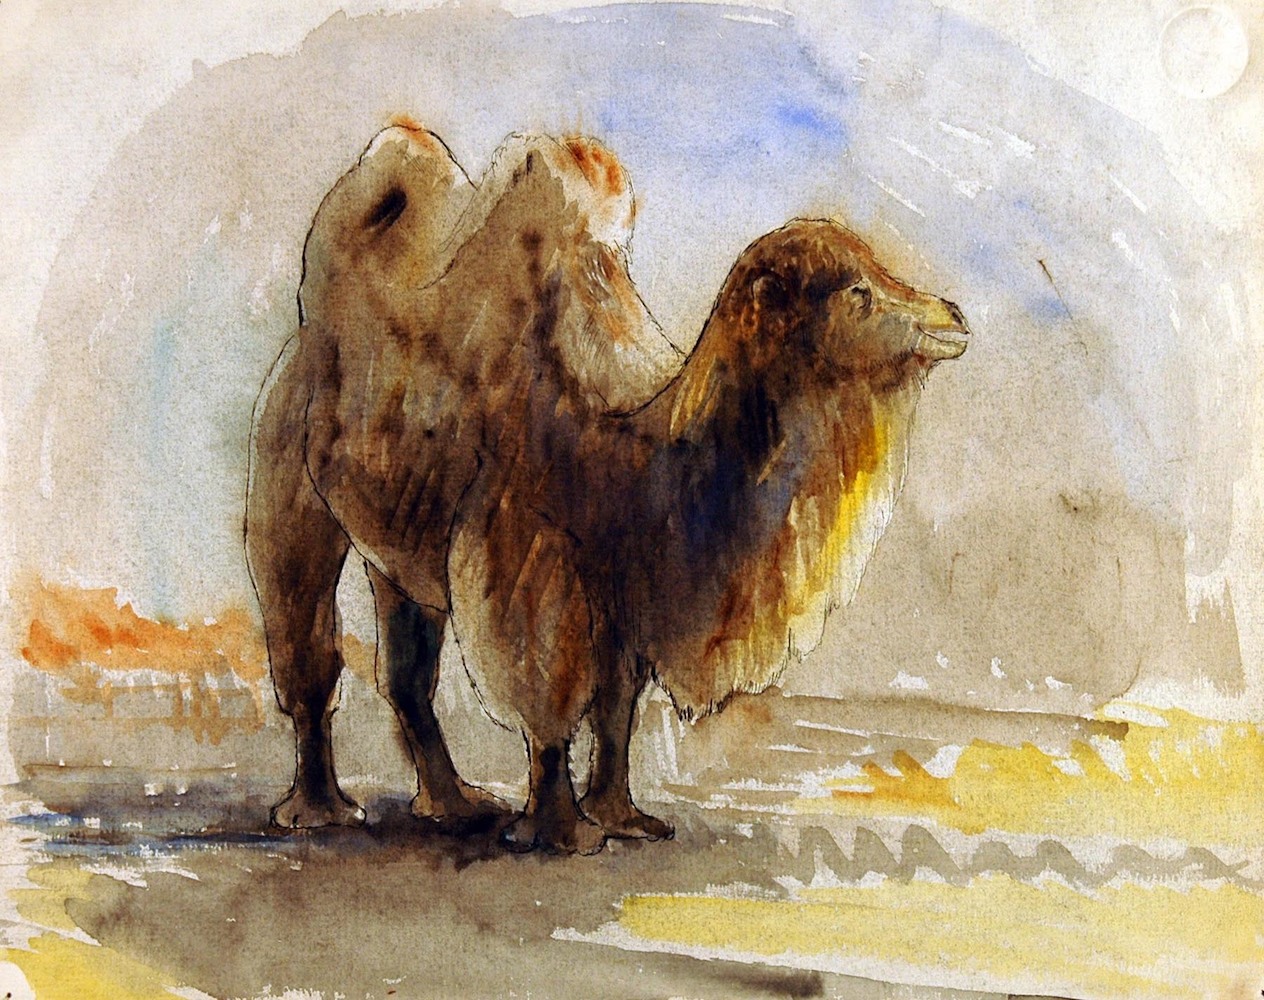 A Bactrian Camel